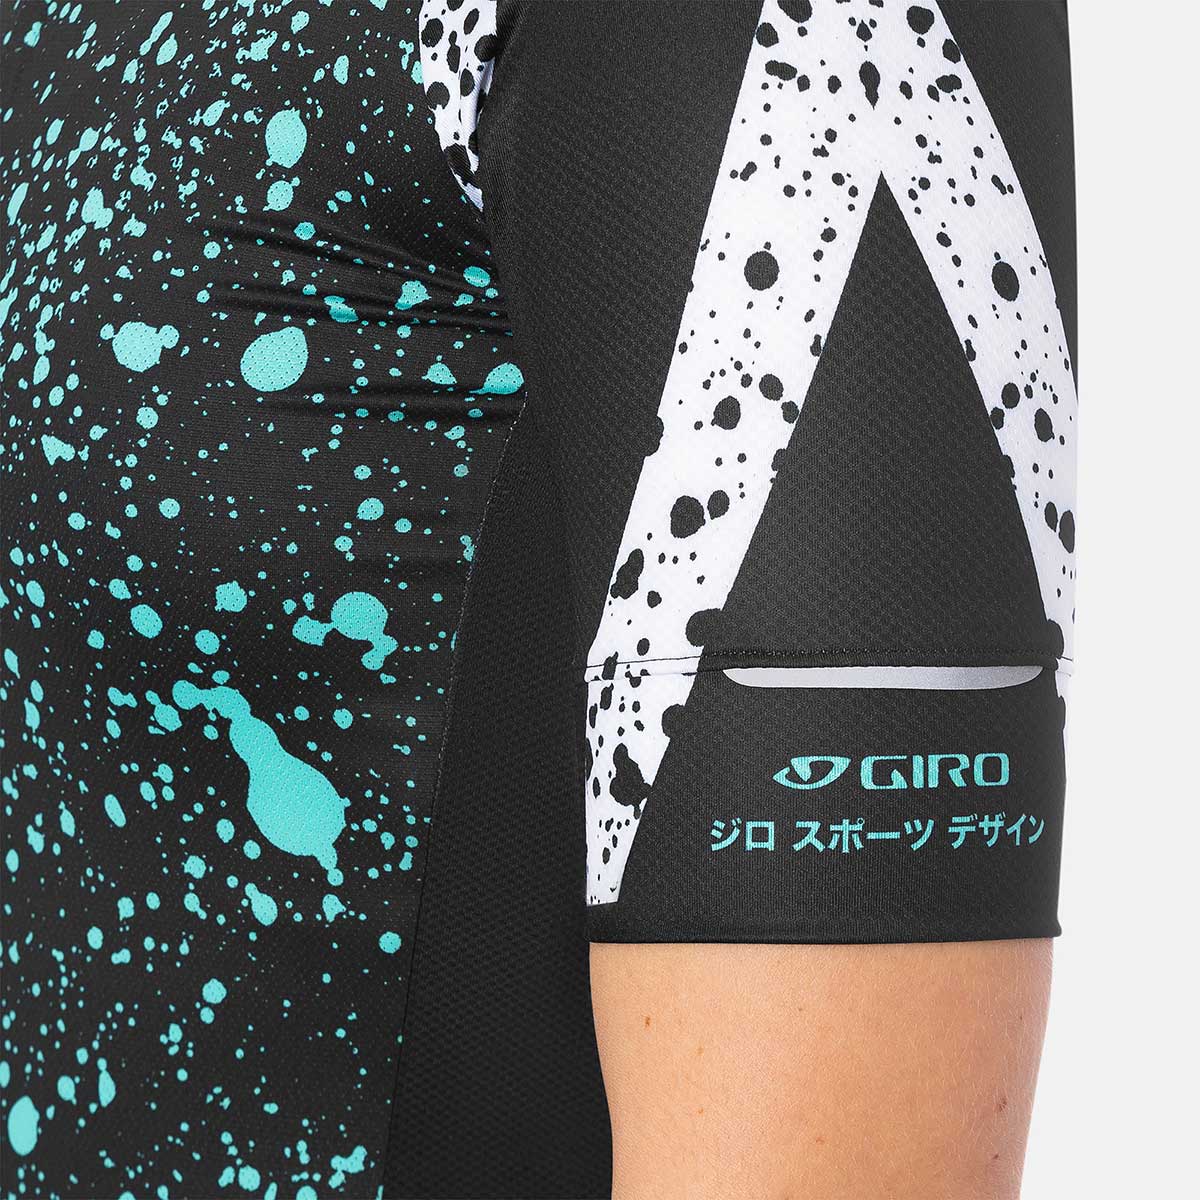 giro-x-yasuda-women's-road-cycling-jersey-limited-edition